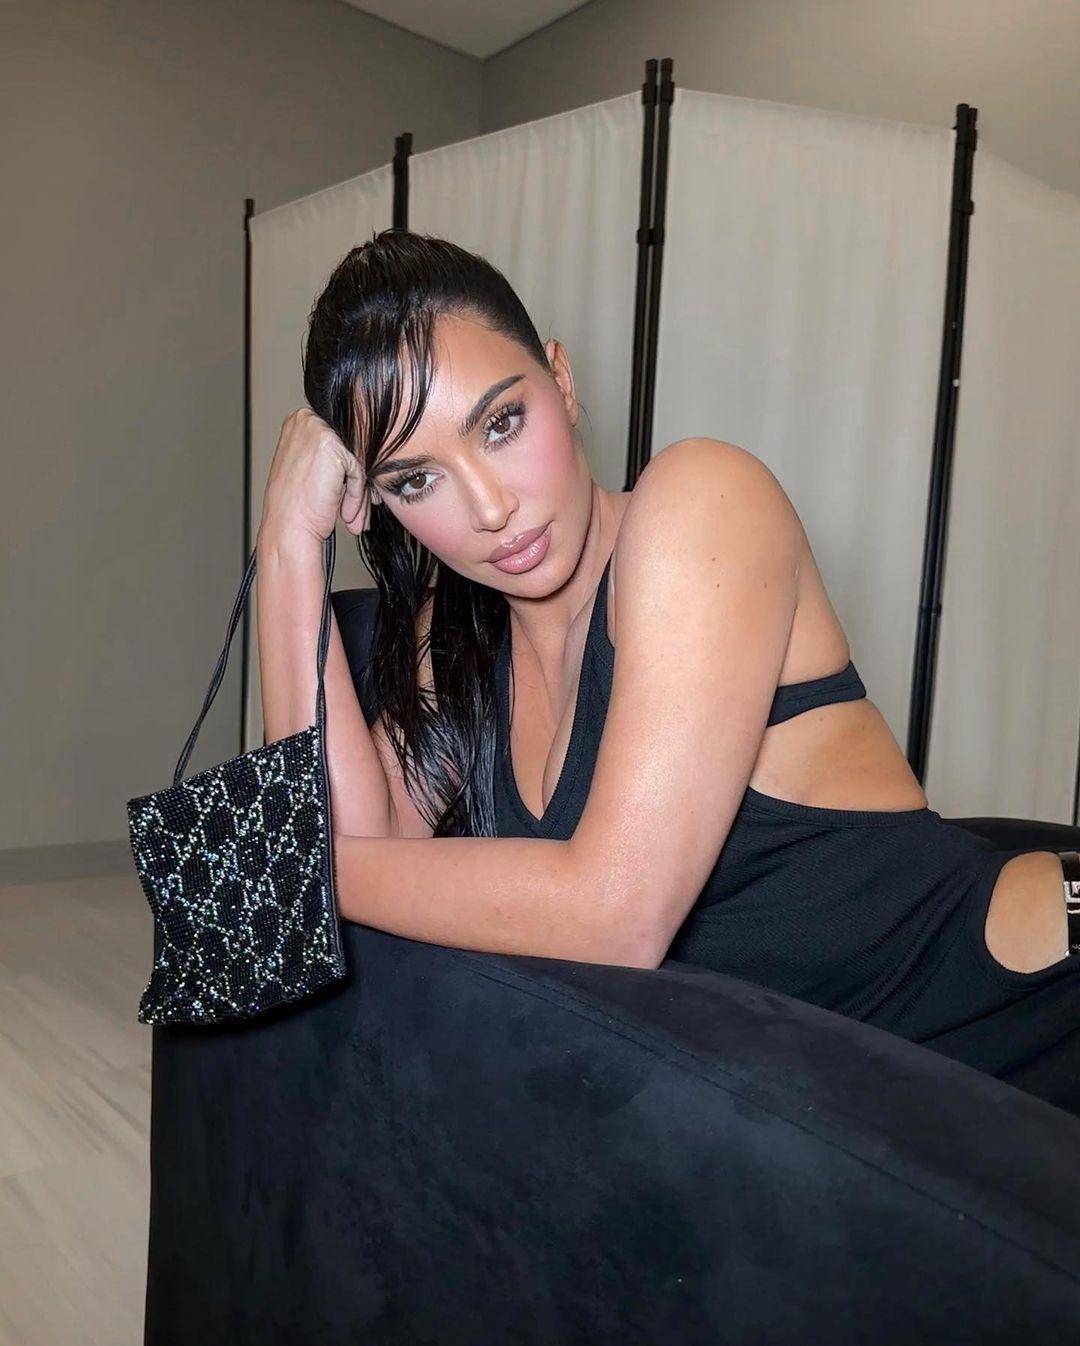 Kim Kardashian leaves fans drooling as she flaunts long legs